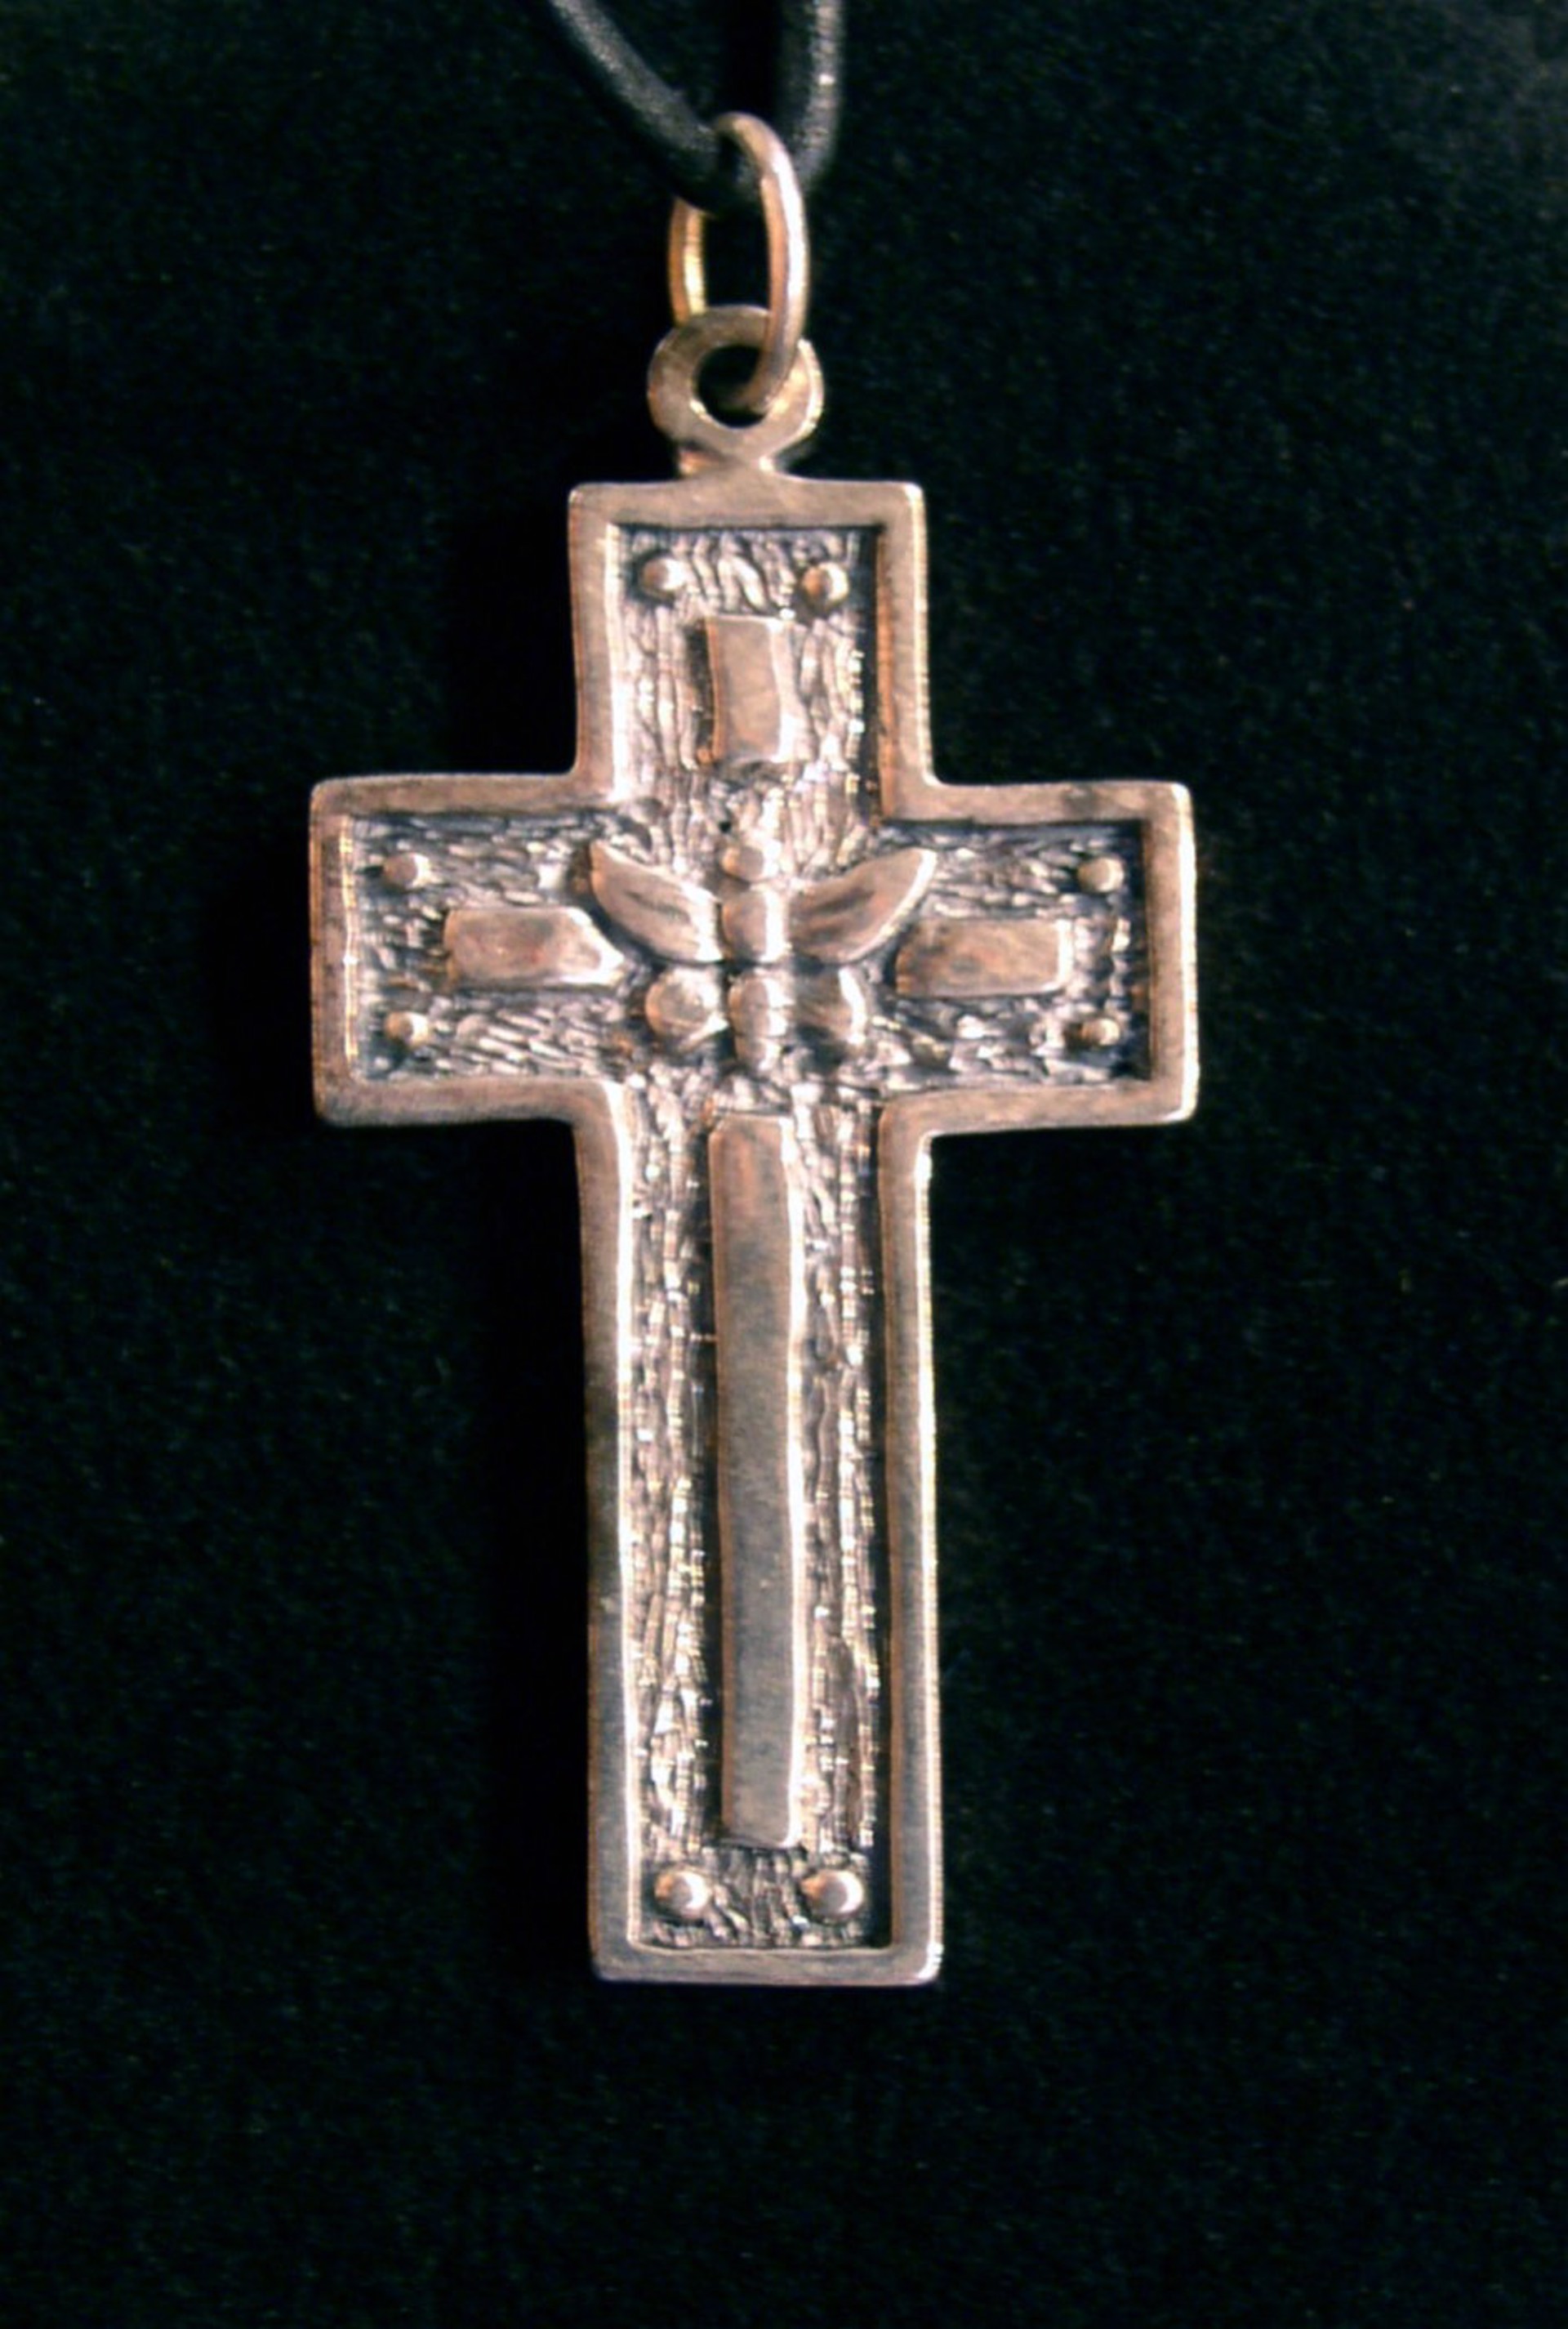 Mystic Cross by Robert Rogers